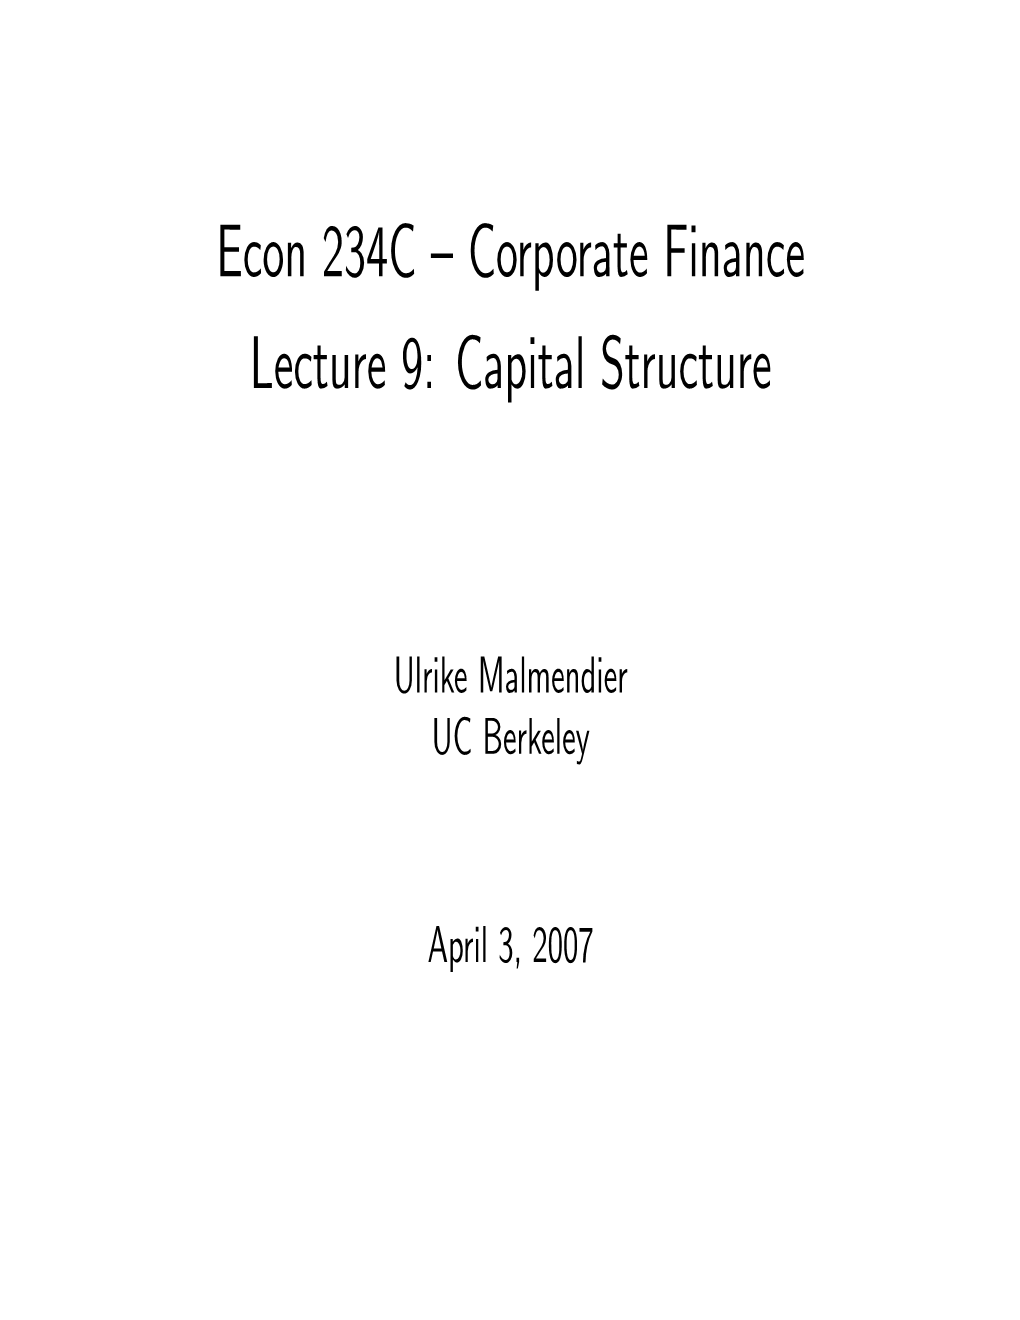 Econ 234C — Corporate Finance Lecture 9: Capital Structure